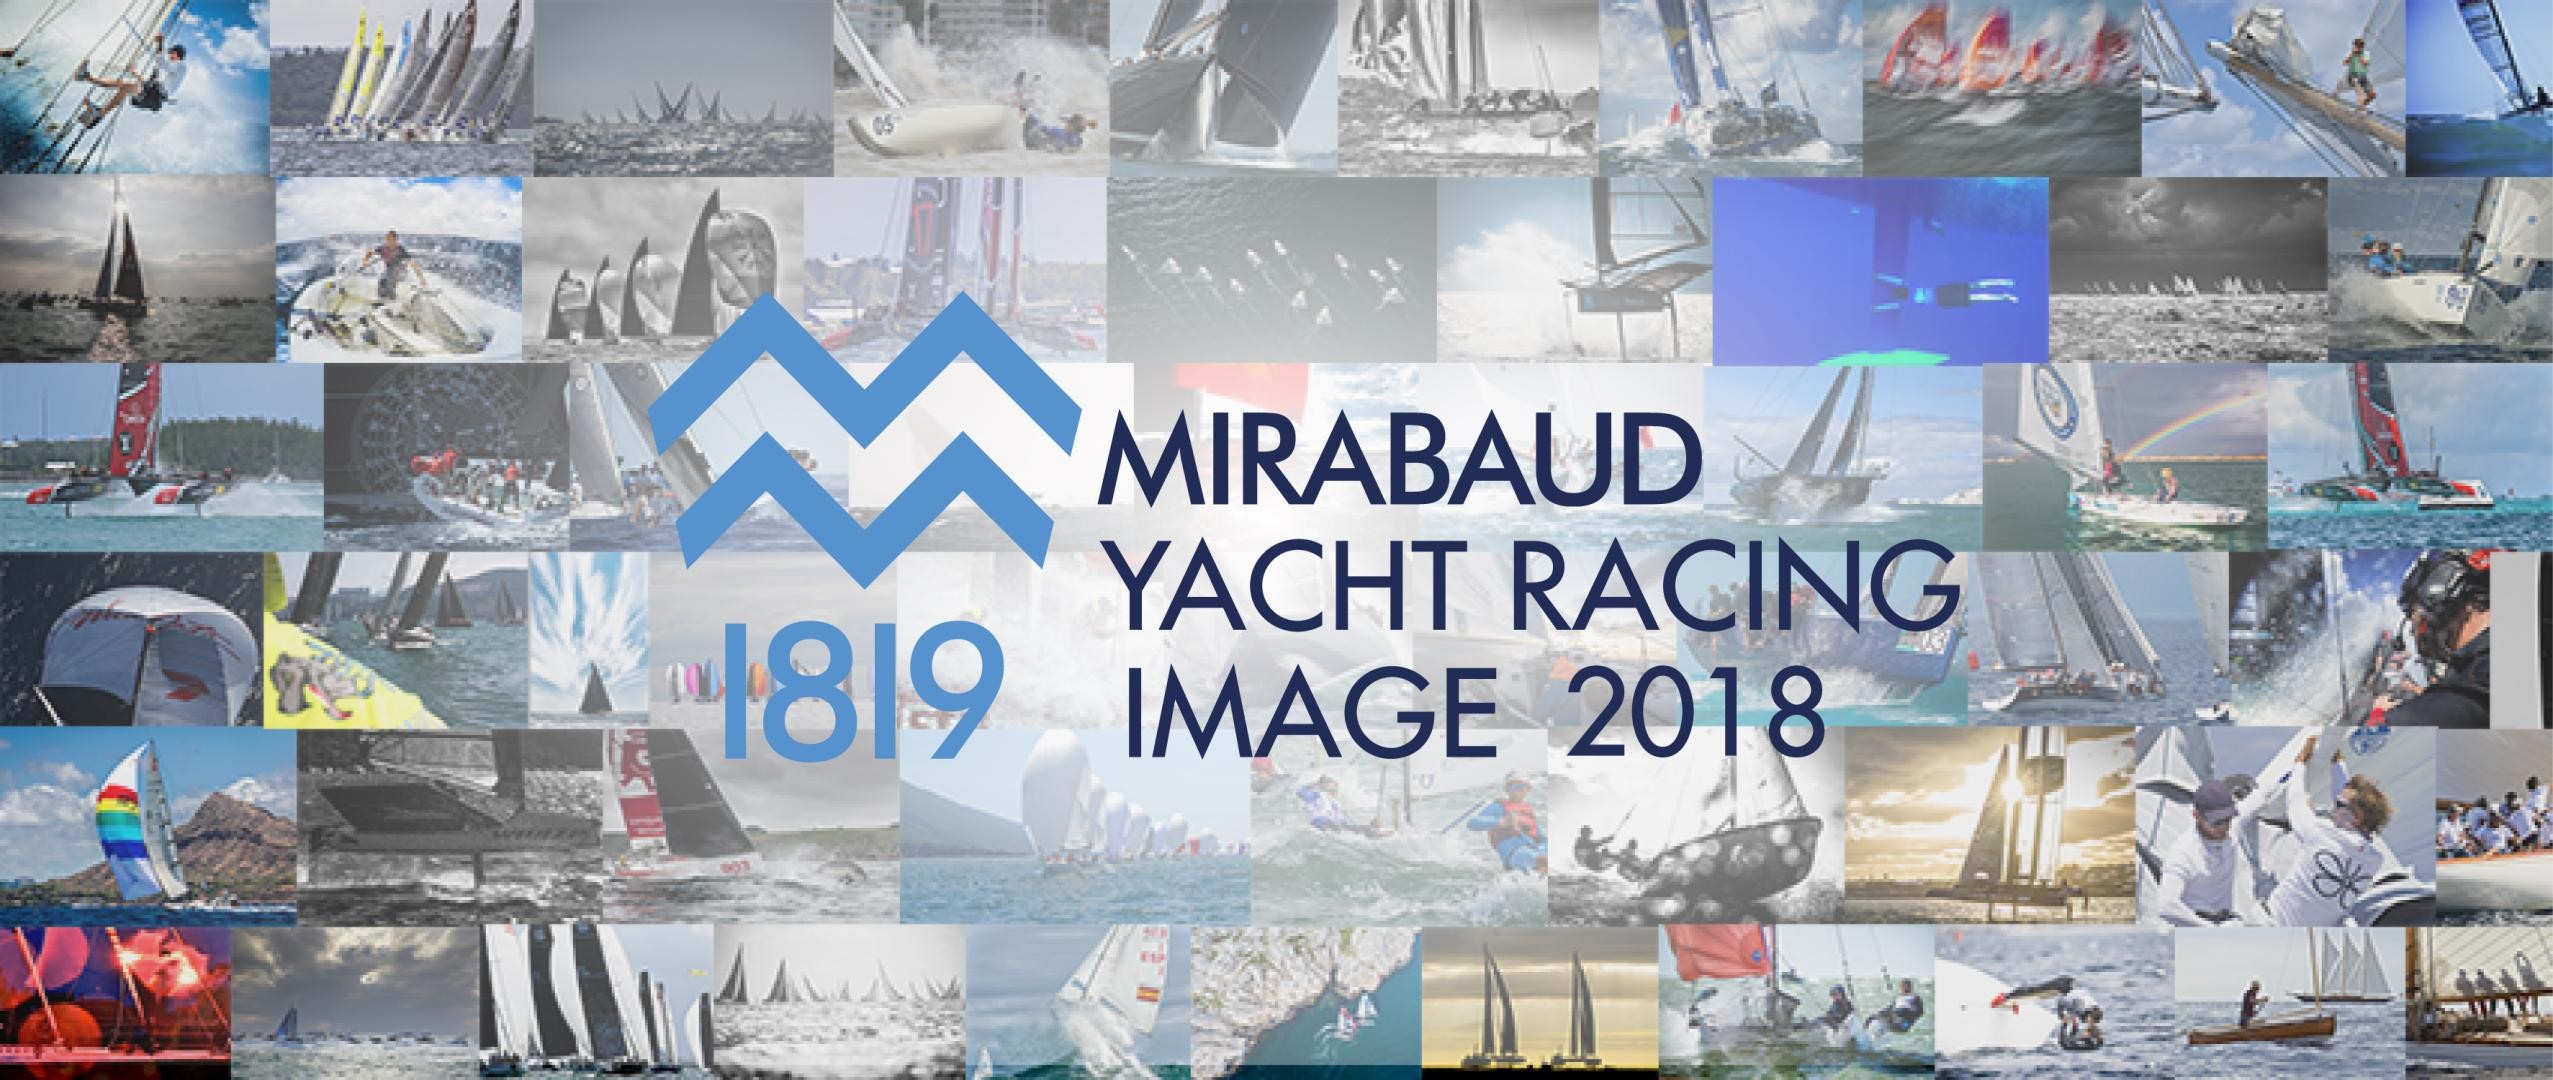 Mirabaud Yacht Racing Image announces international jury 2018